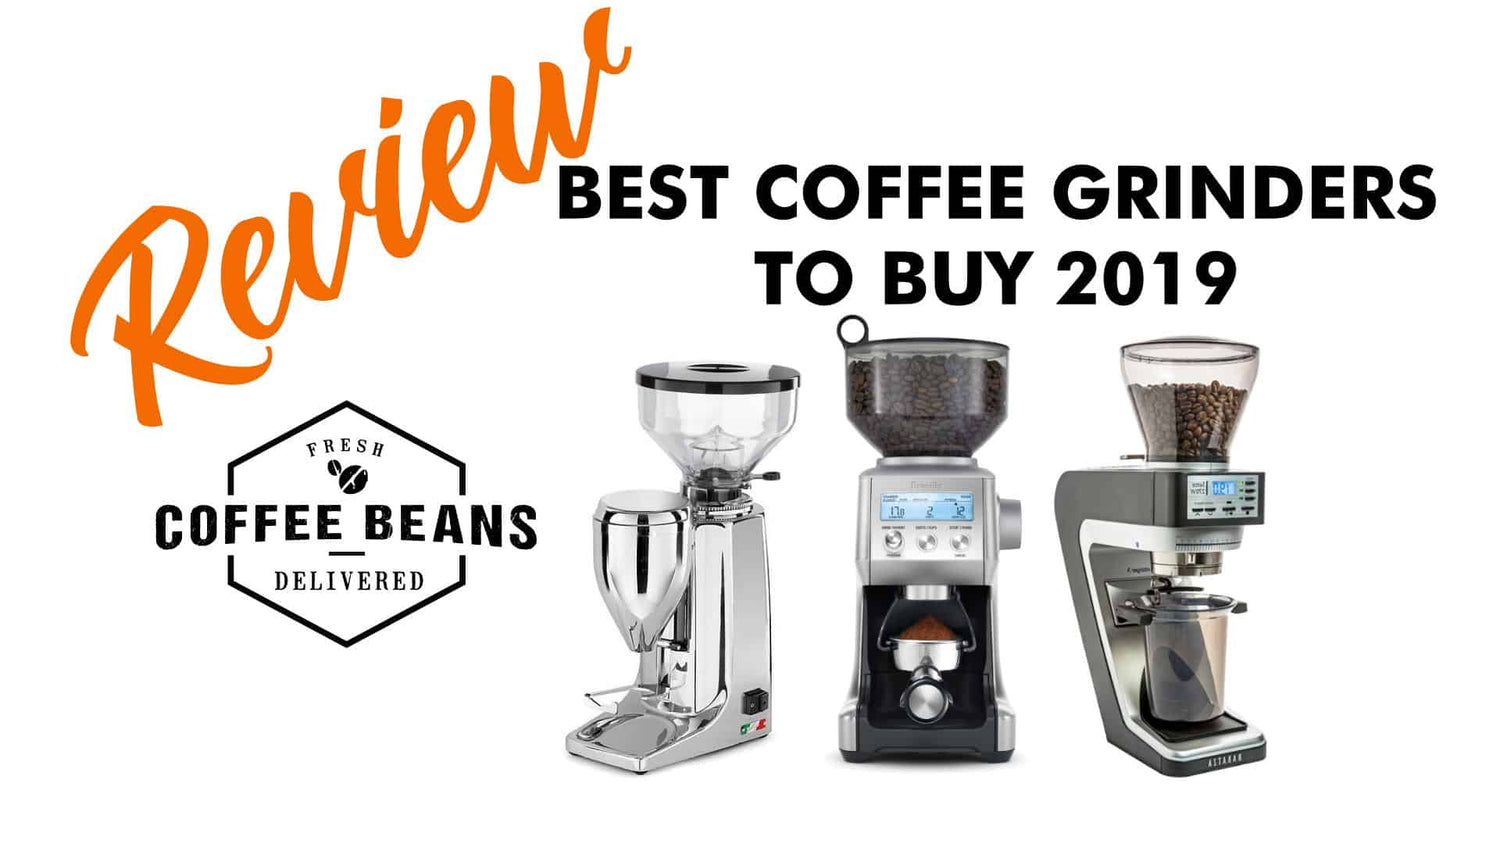 Three coffee grinders review for best coffee grinders to buy in 2019